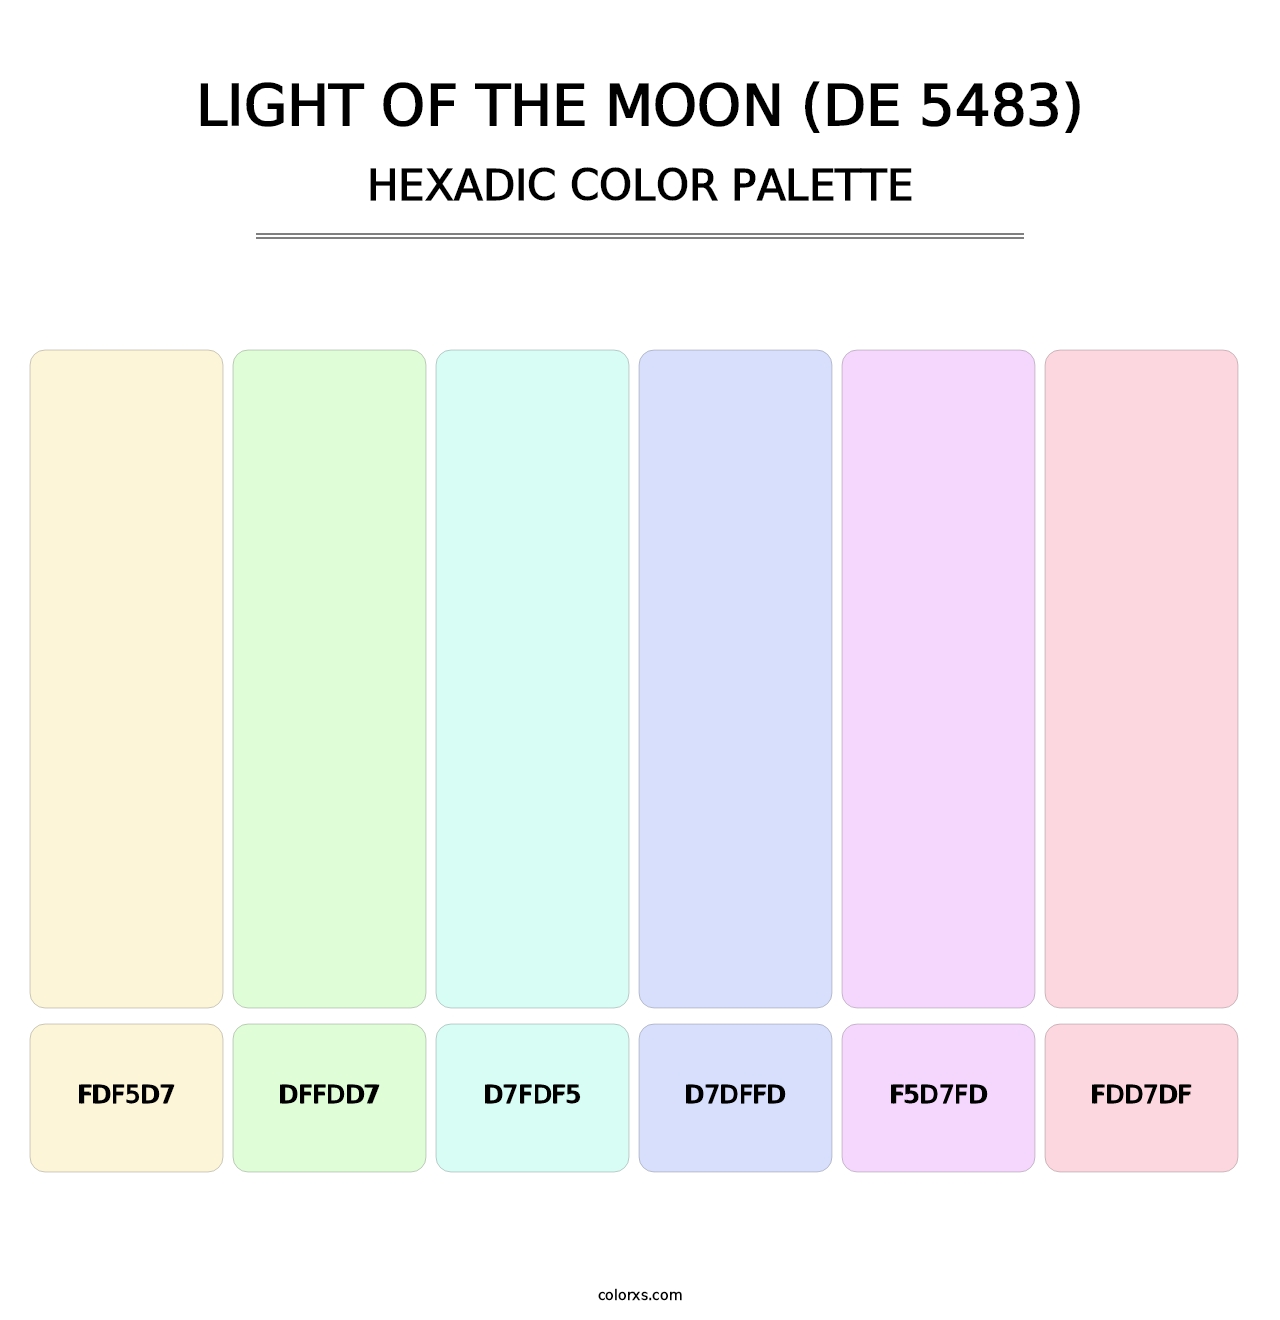 Light of the Moon (DE 5483) - Hexadic Color Palette